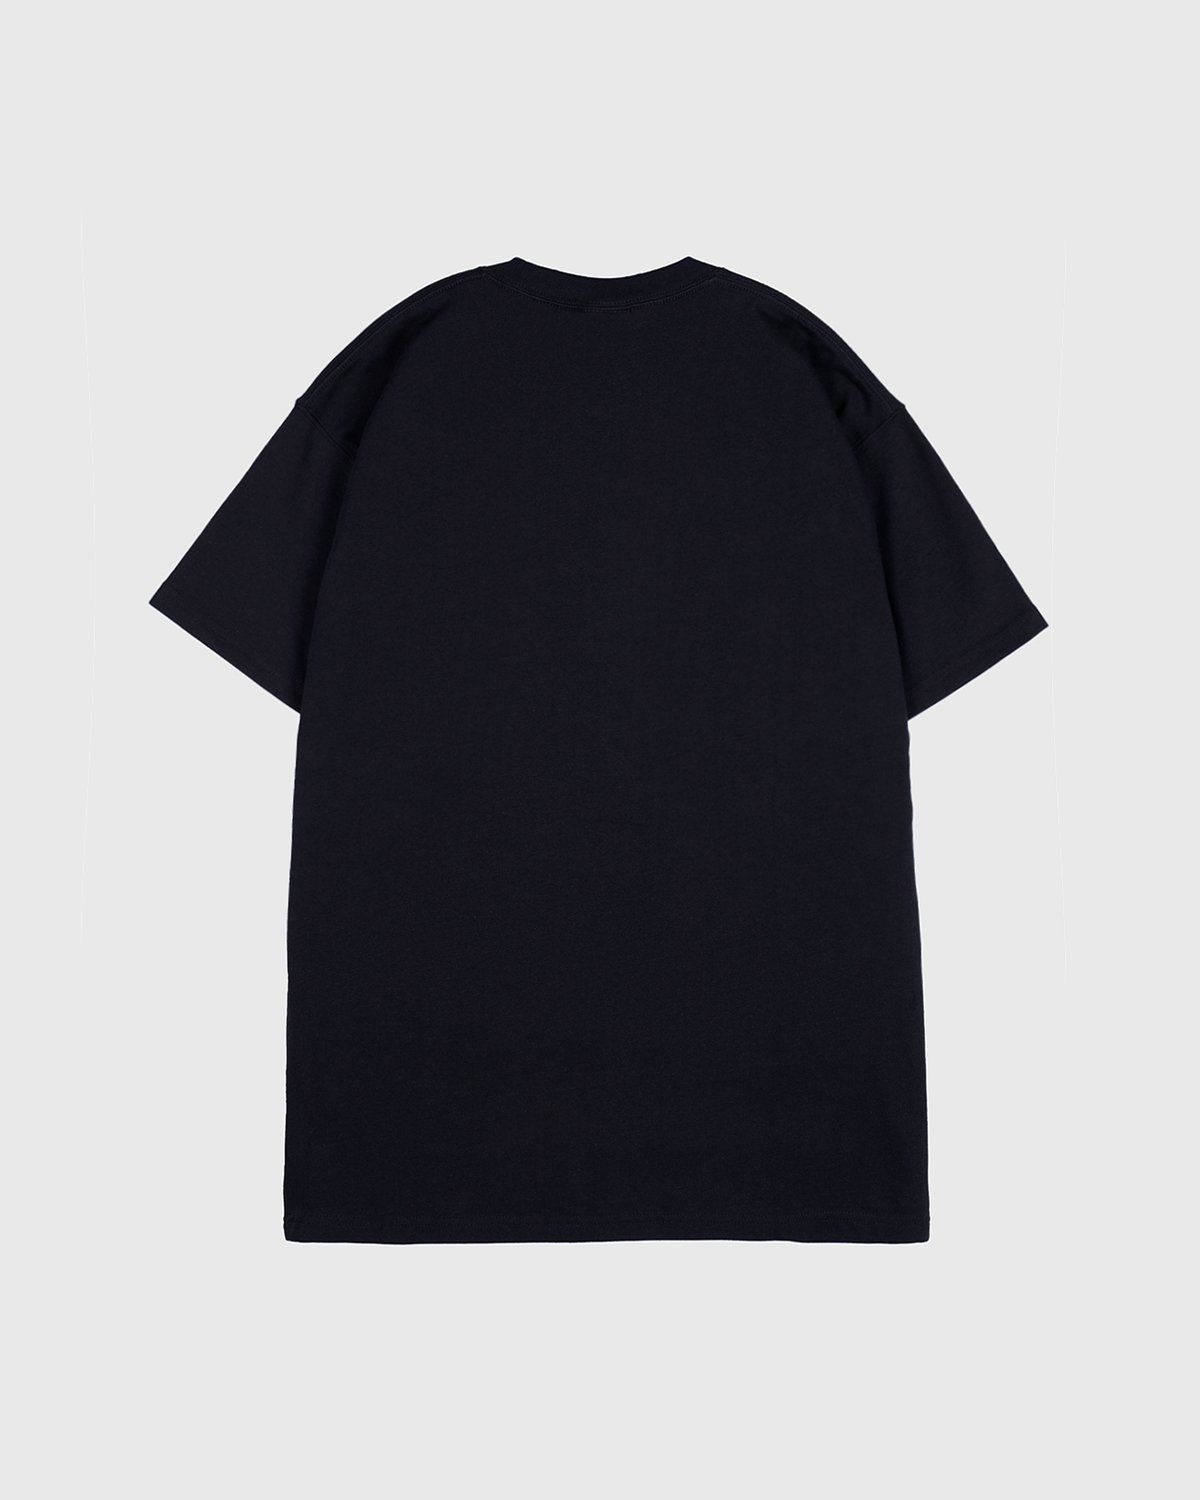 Nike ACG – M NRG ACG SS Wizard Tee Black - T-Shirts - Black - Image 2